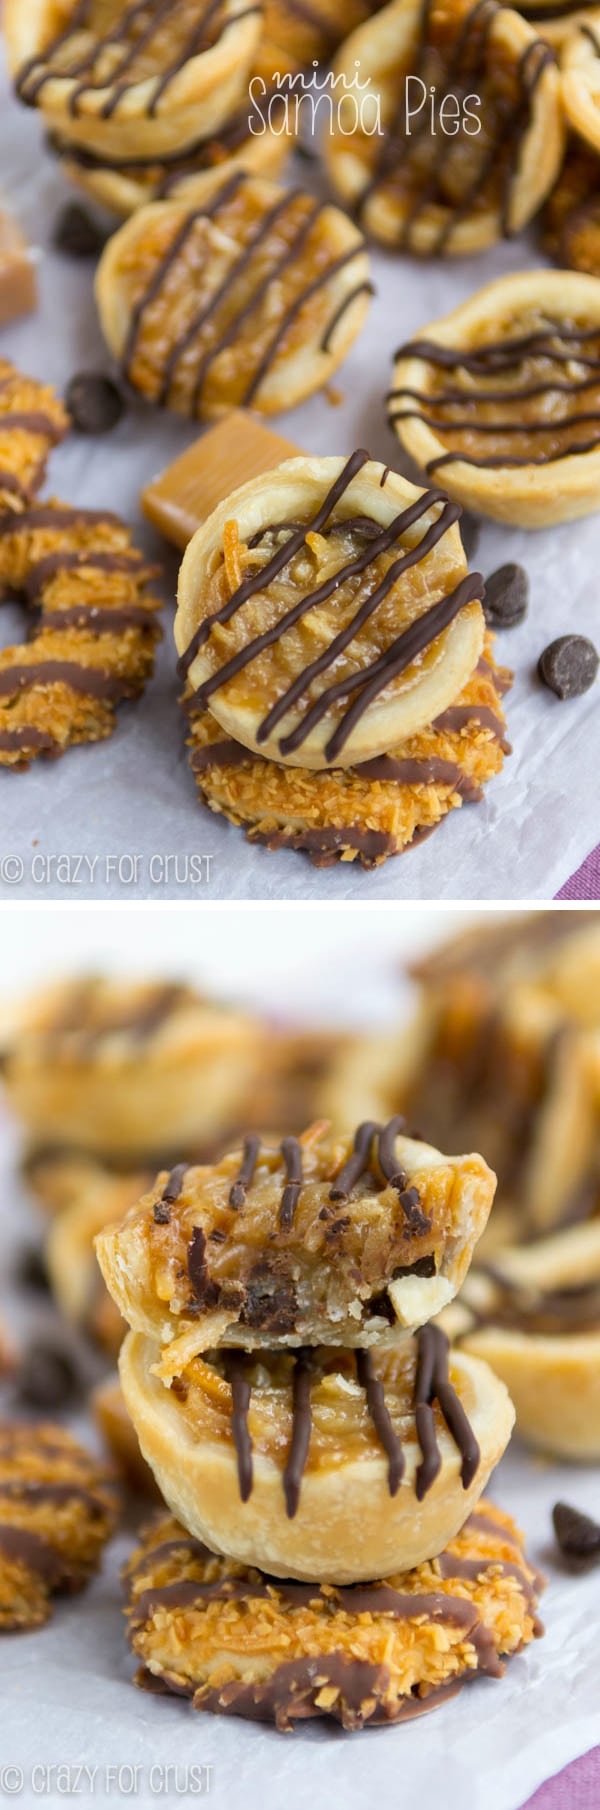 Photo.collage of Mini Samoa Pies with samoa cookies and chocolate chips